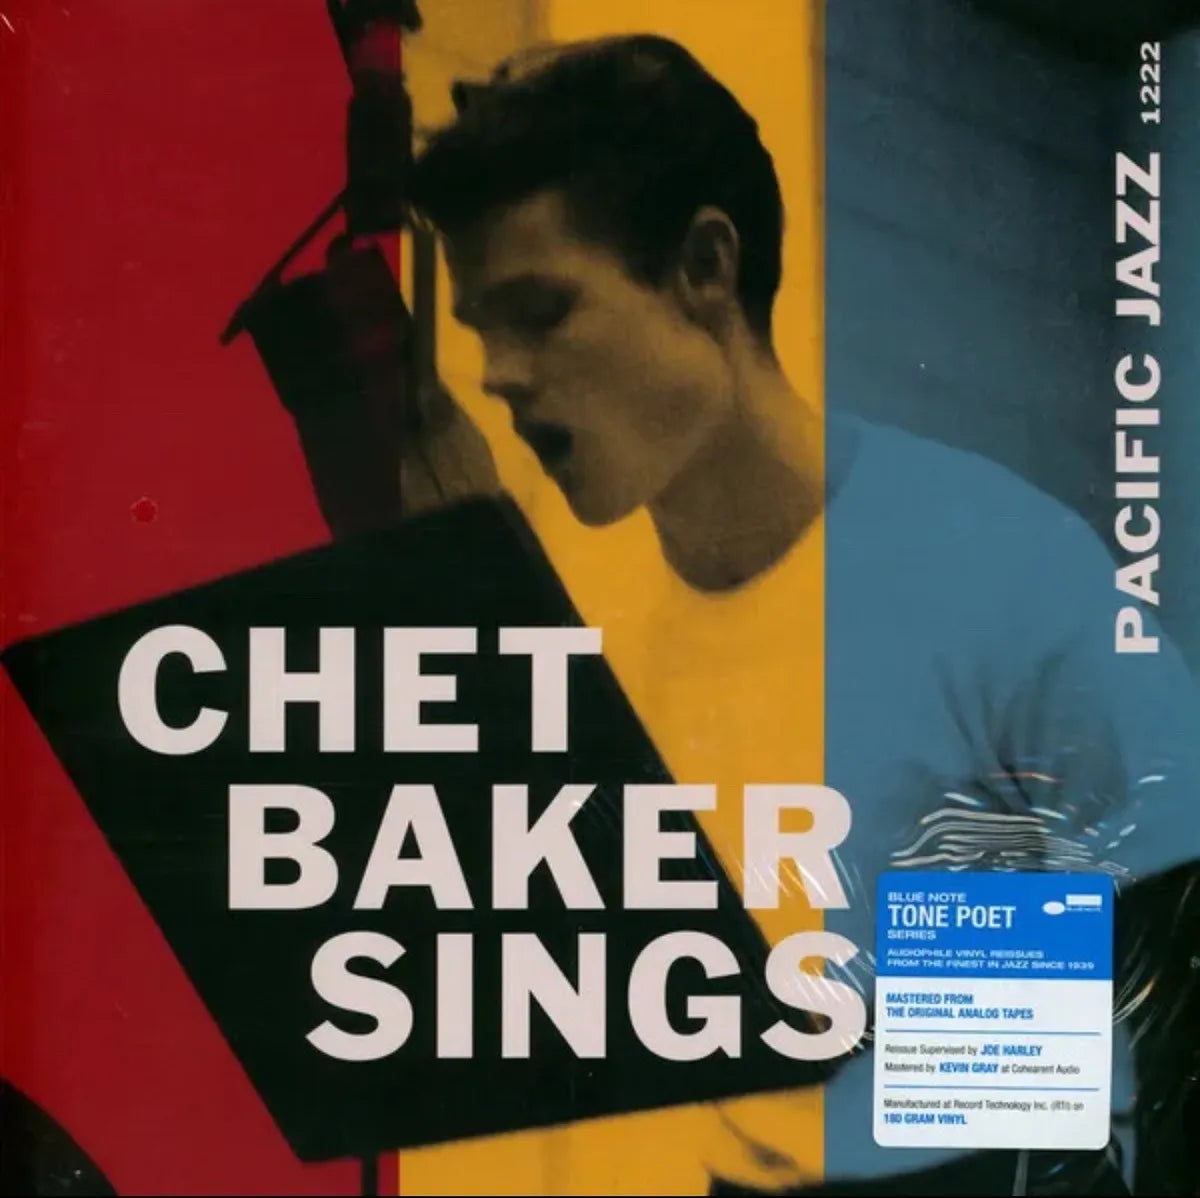 Chet Baker - Sings: Tone Poet (Vinyl LP)